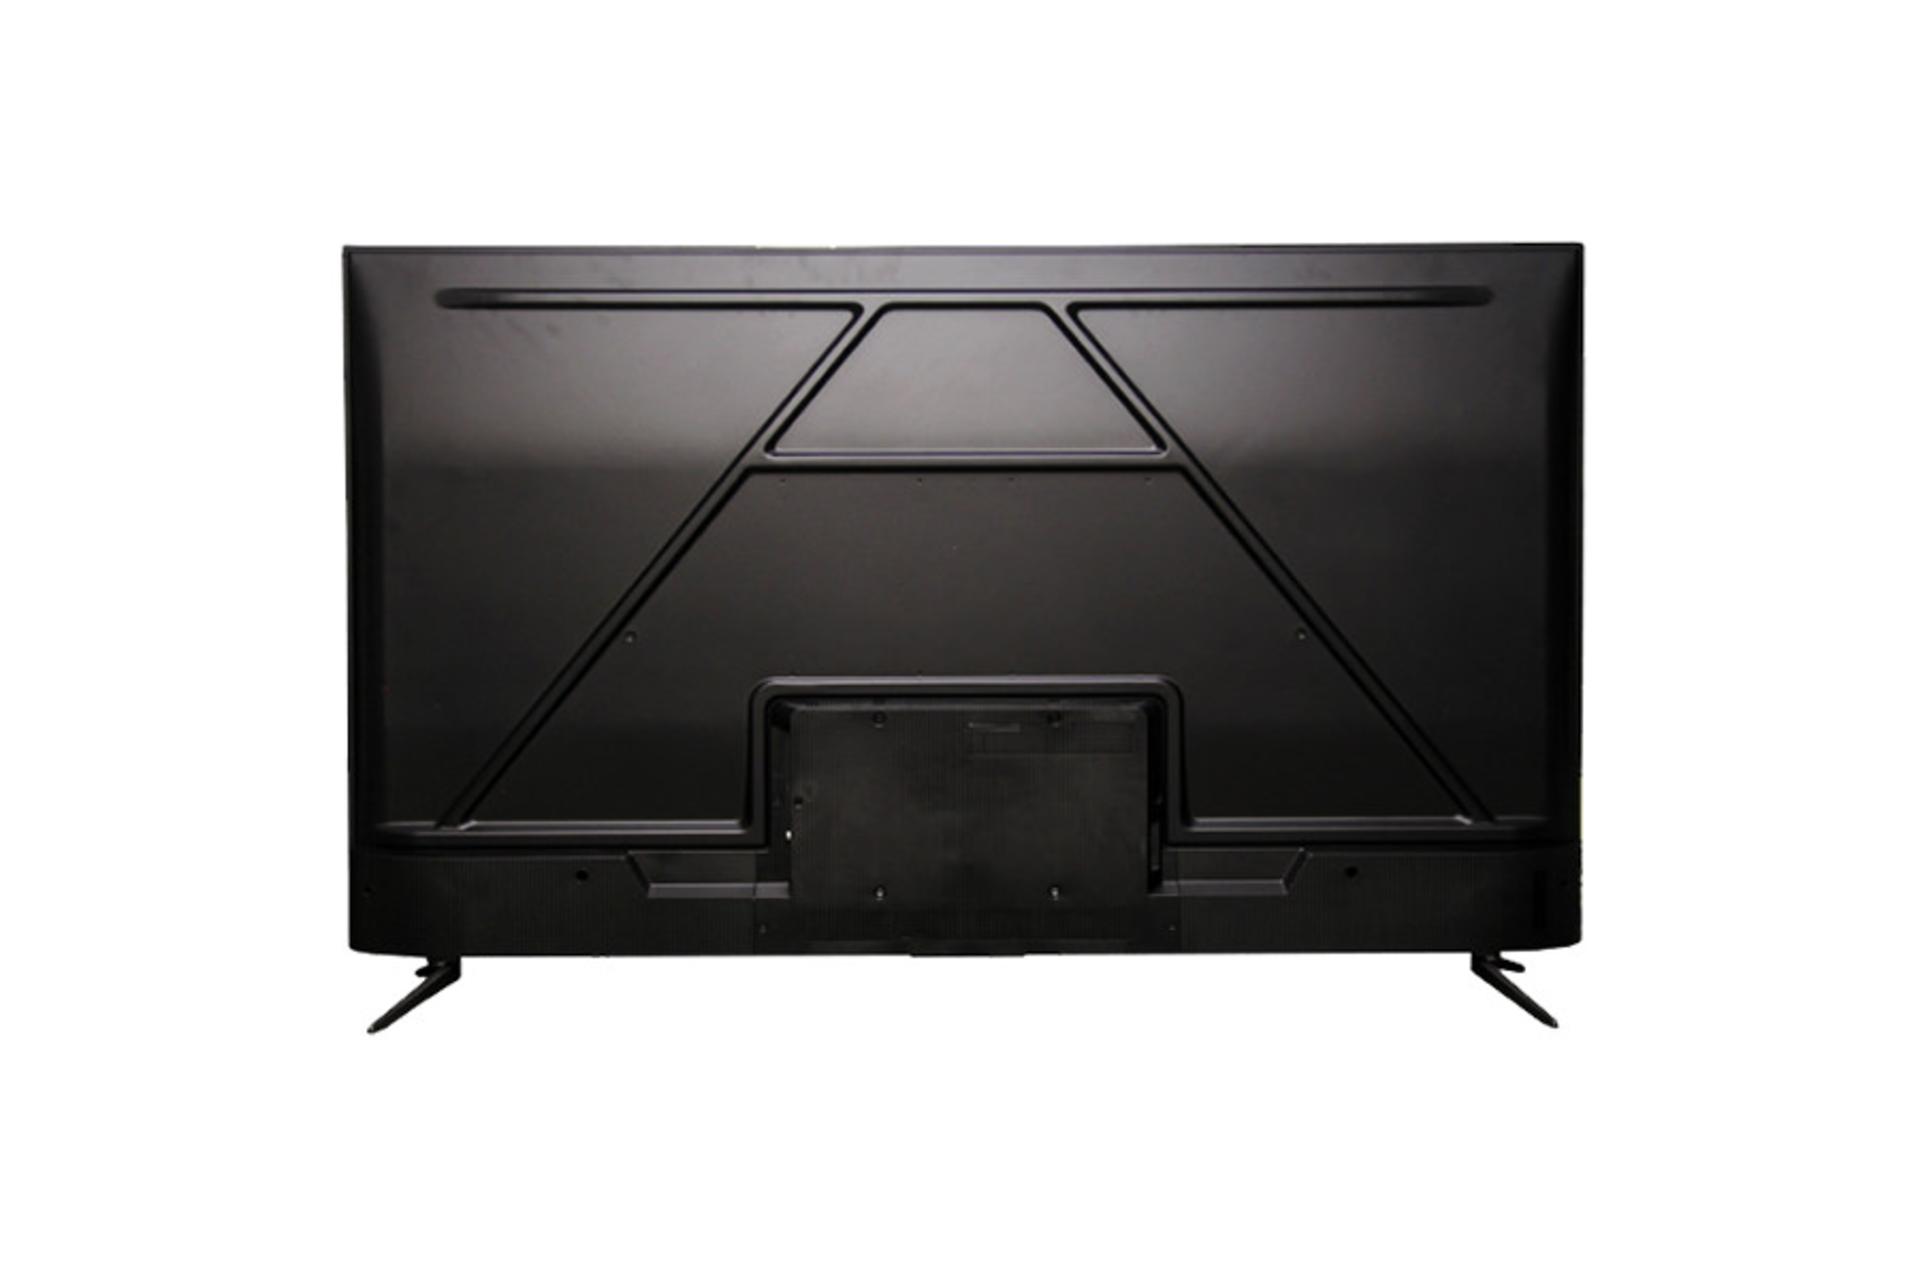 قیمت تلویزیون تی سی ال P735 مدل 65 اینچ + مشخصات